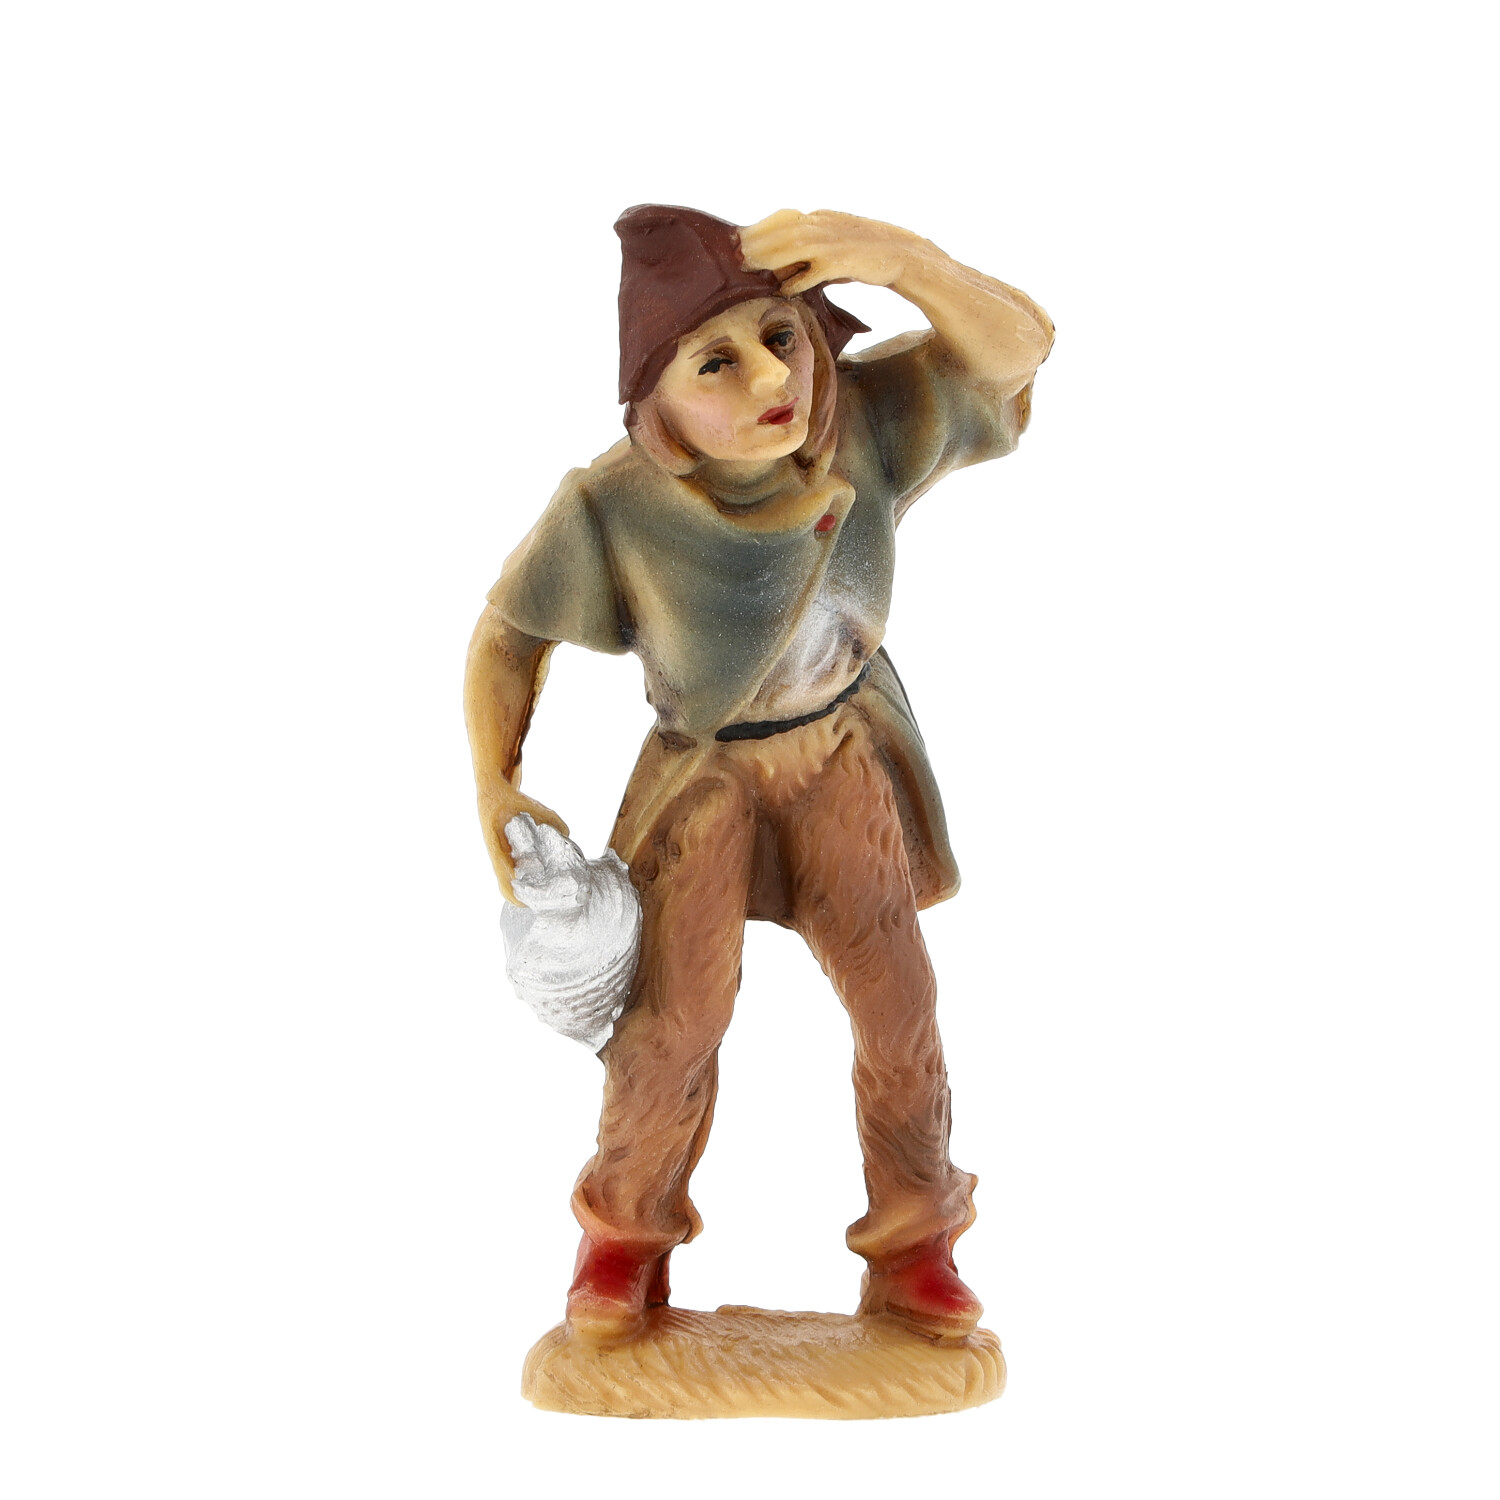 Shepherd with jug - Marolin Plastik - Resin Nativity figure - made in Germany